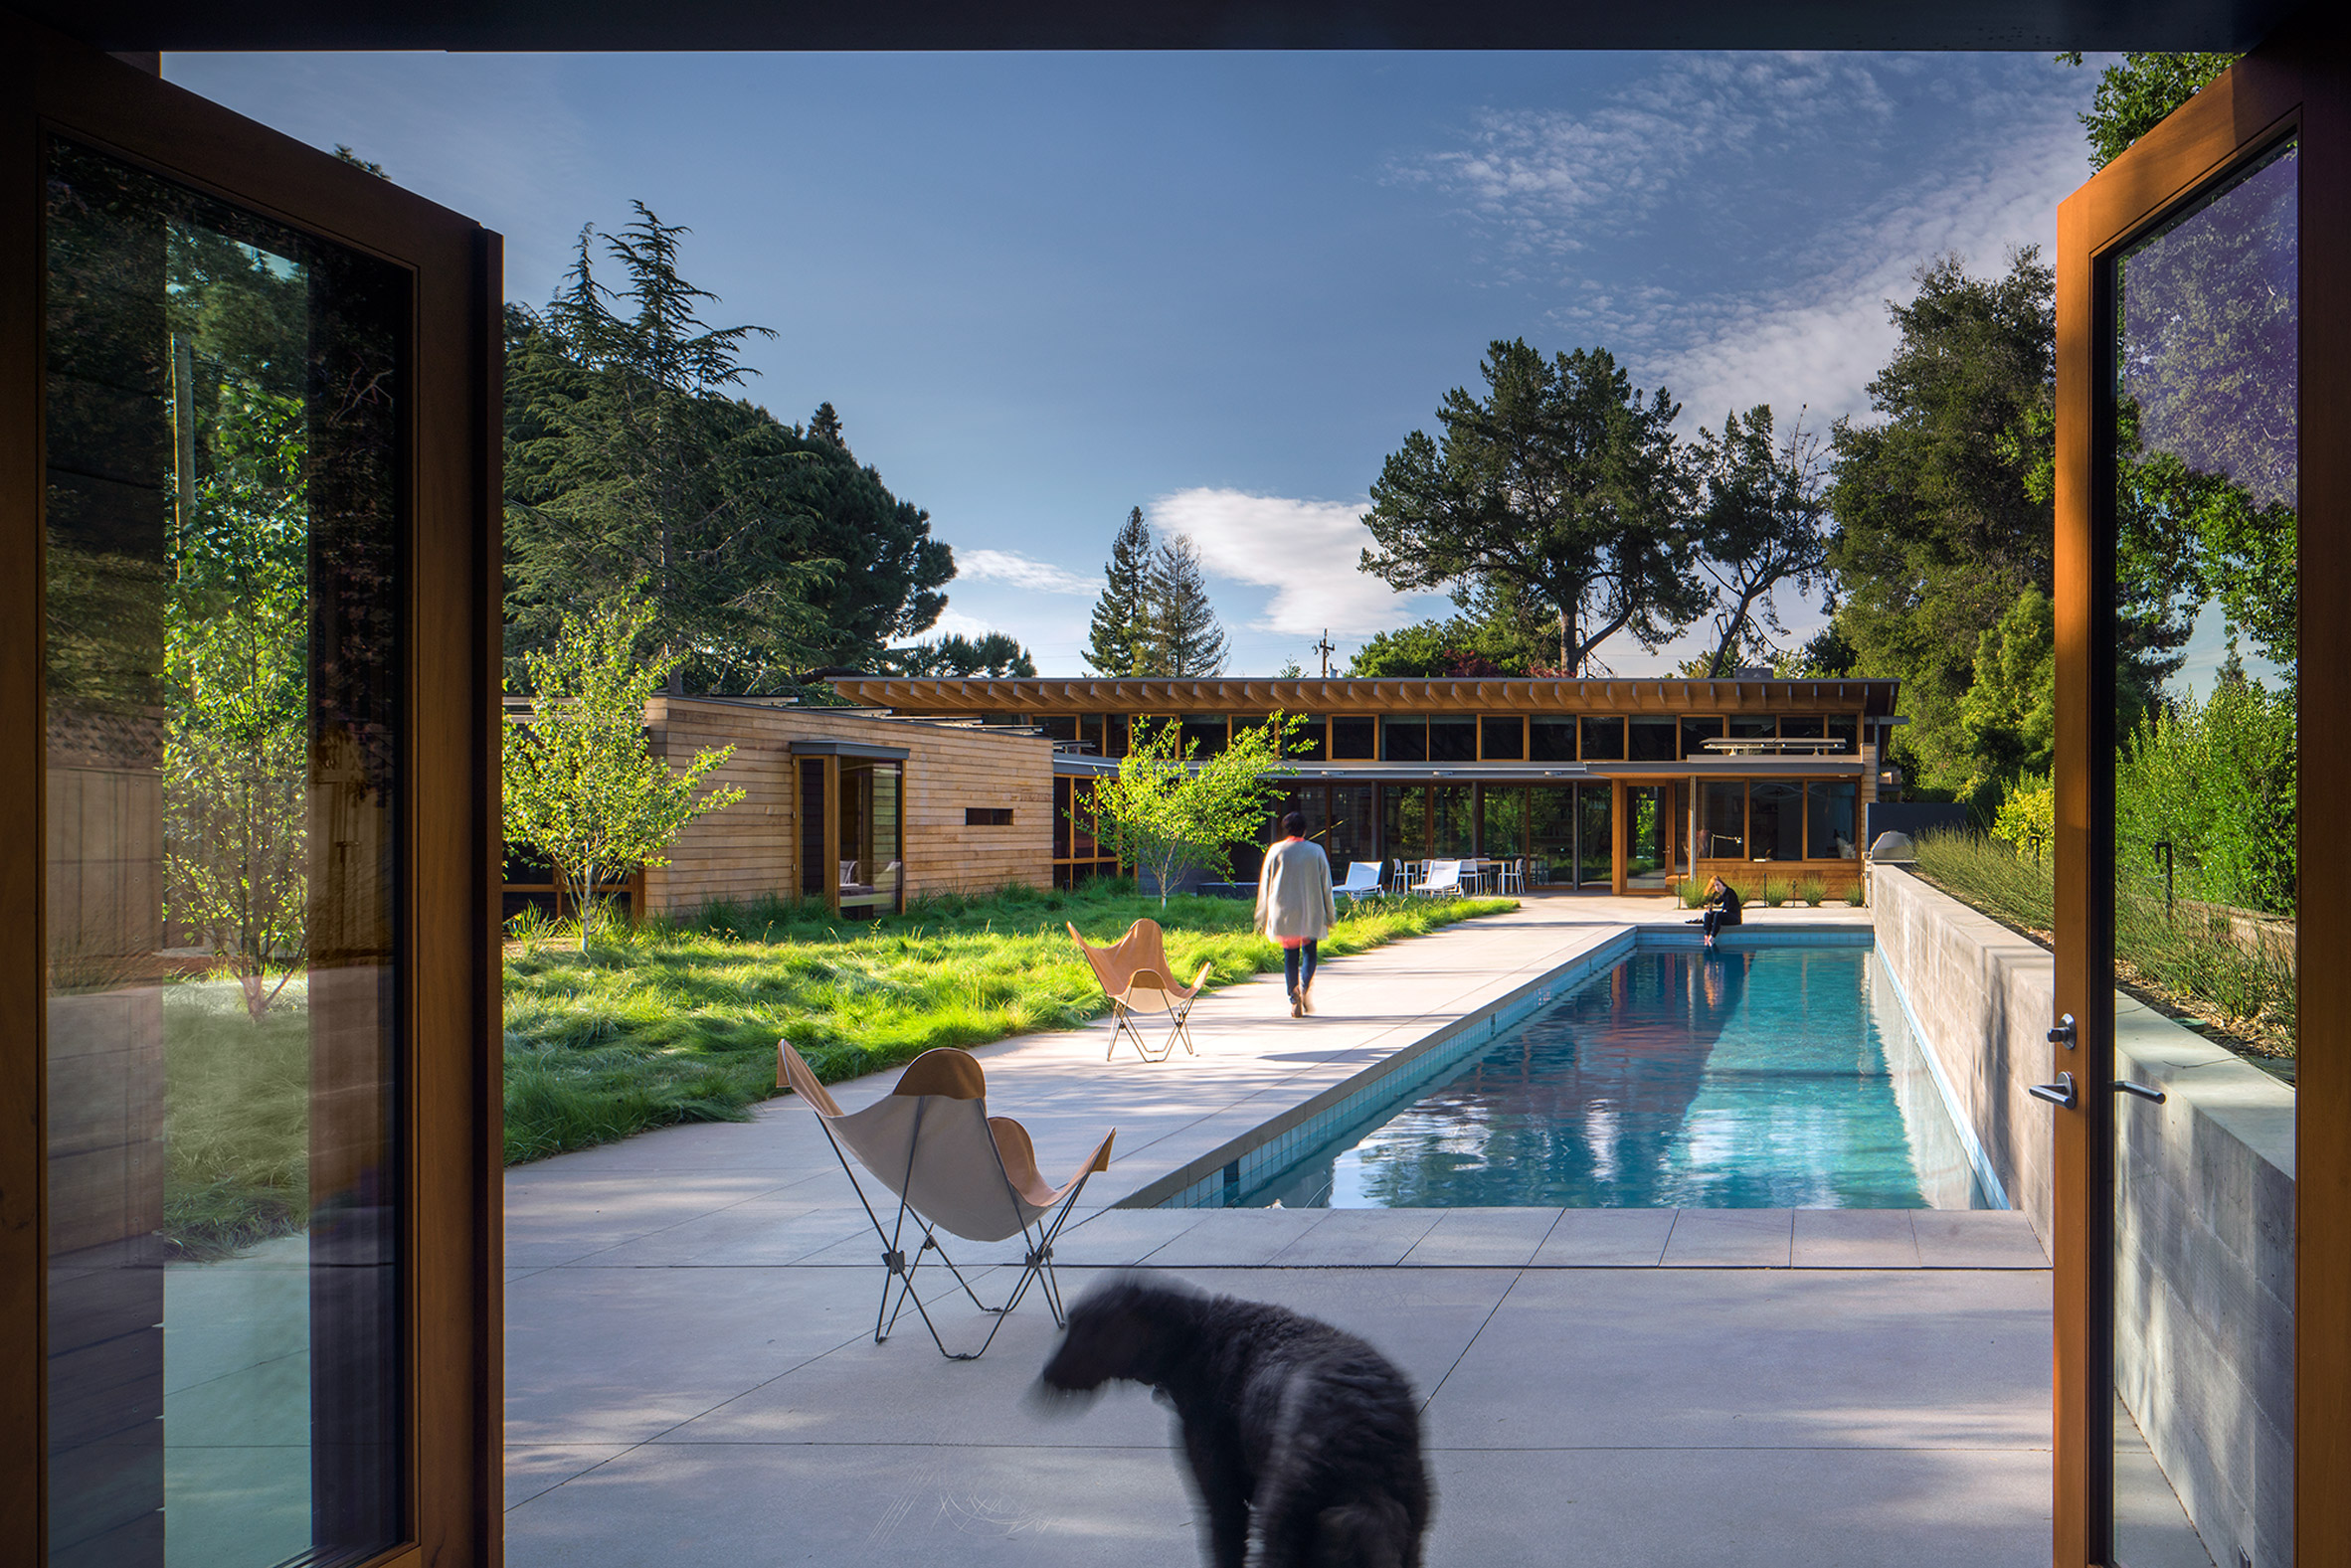 Pool and meadow outside Los Altos Residence by Bohlin Cywinski Jackson